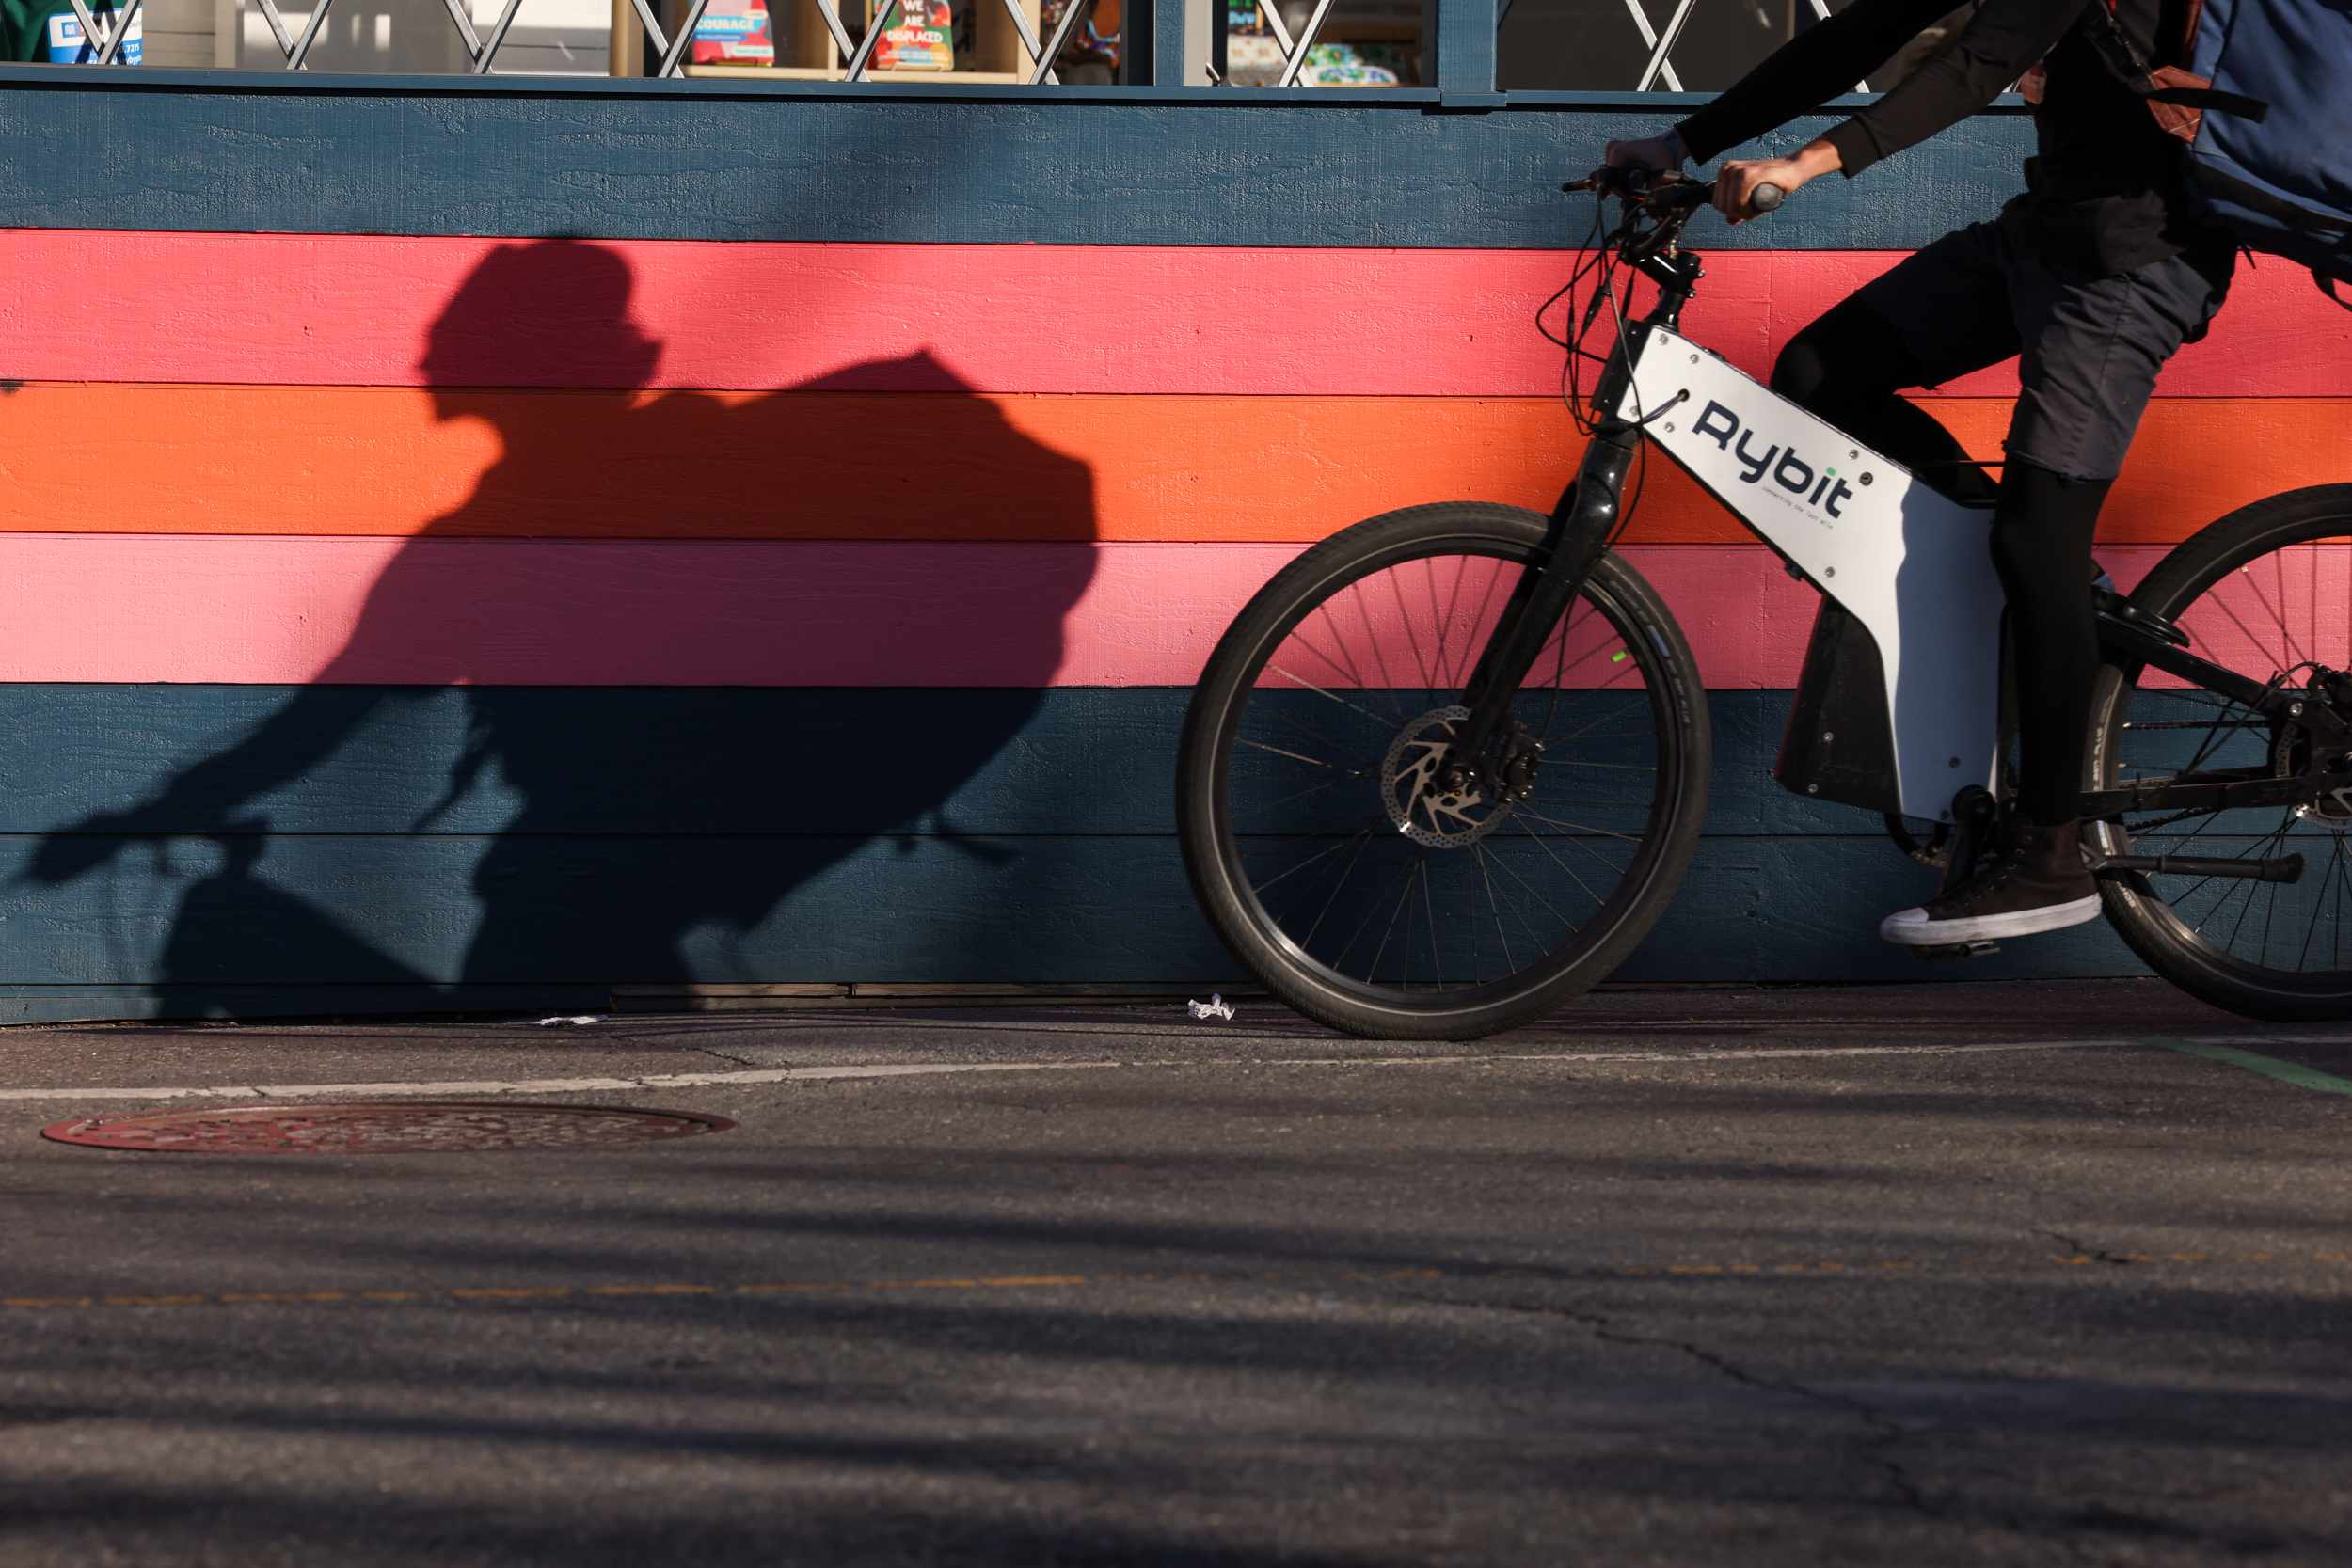 A cyclist casts a sharp shadow on a colorful, striped wall while riding an e-bike.